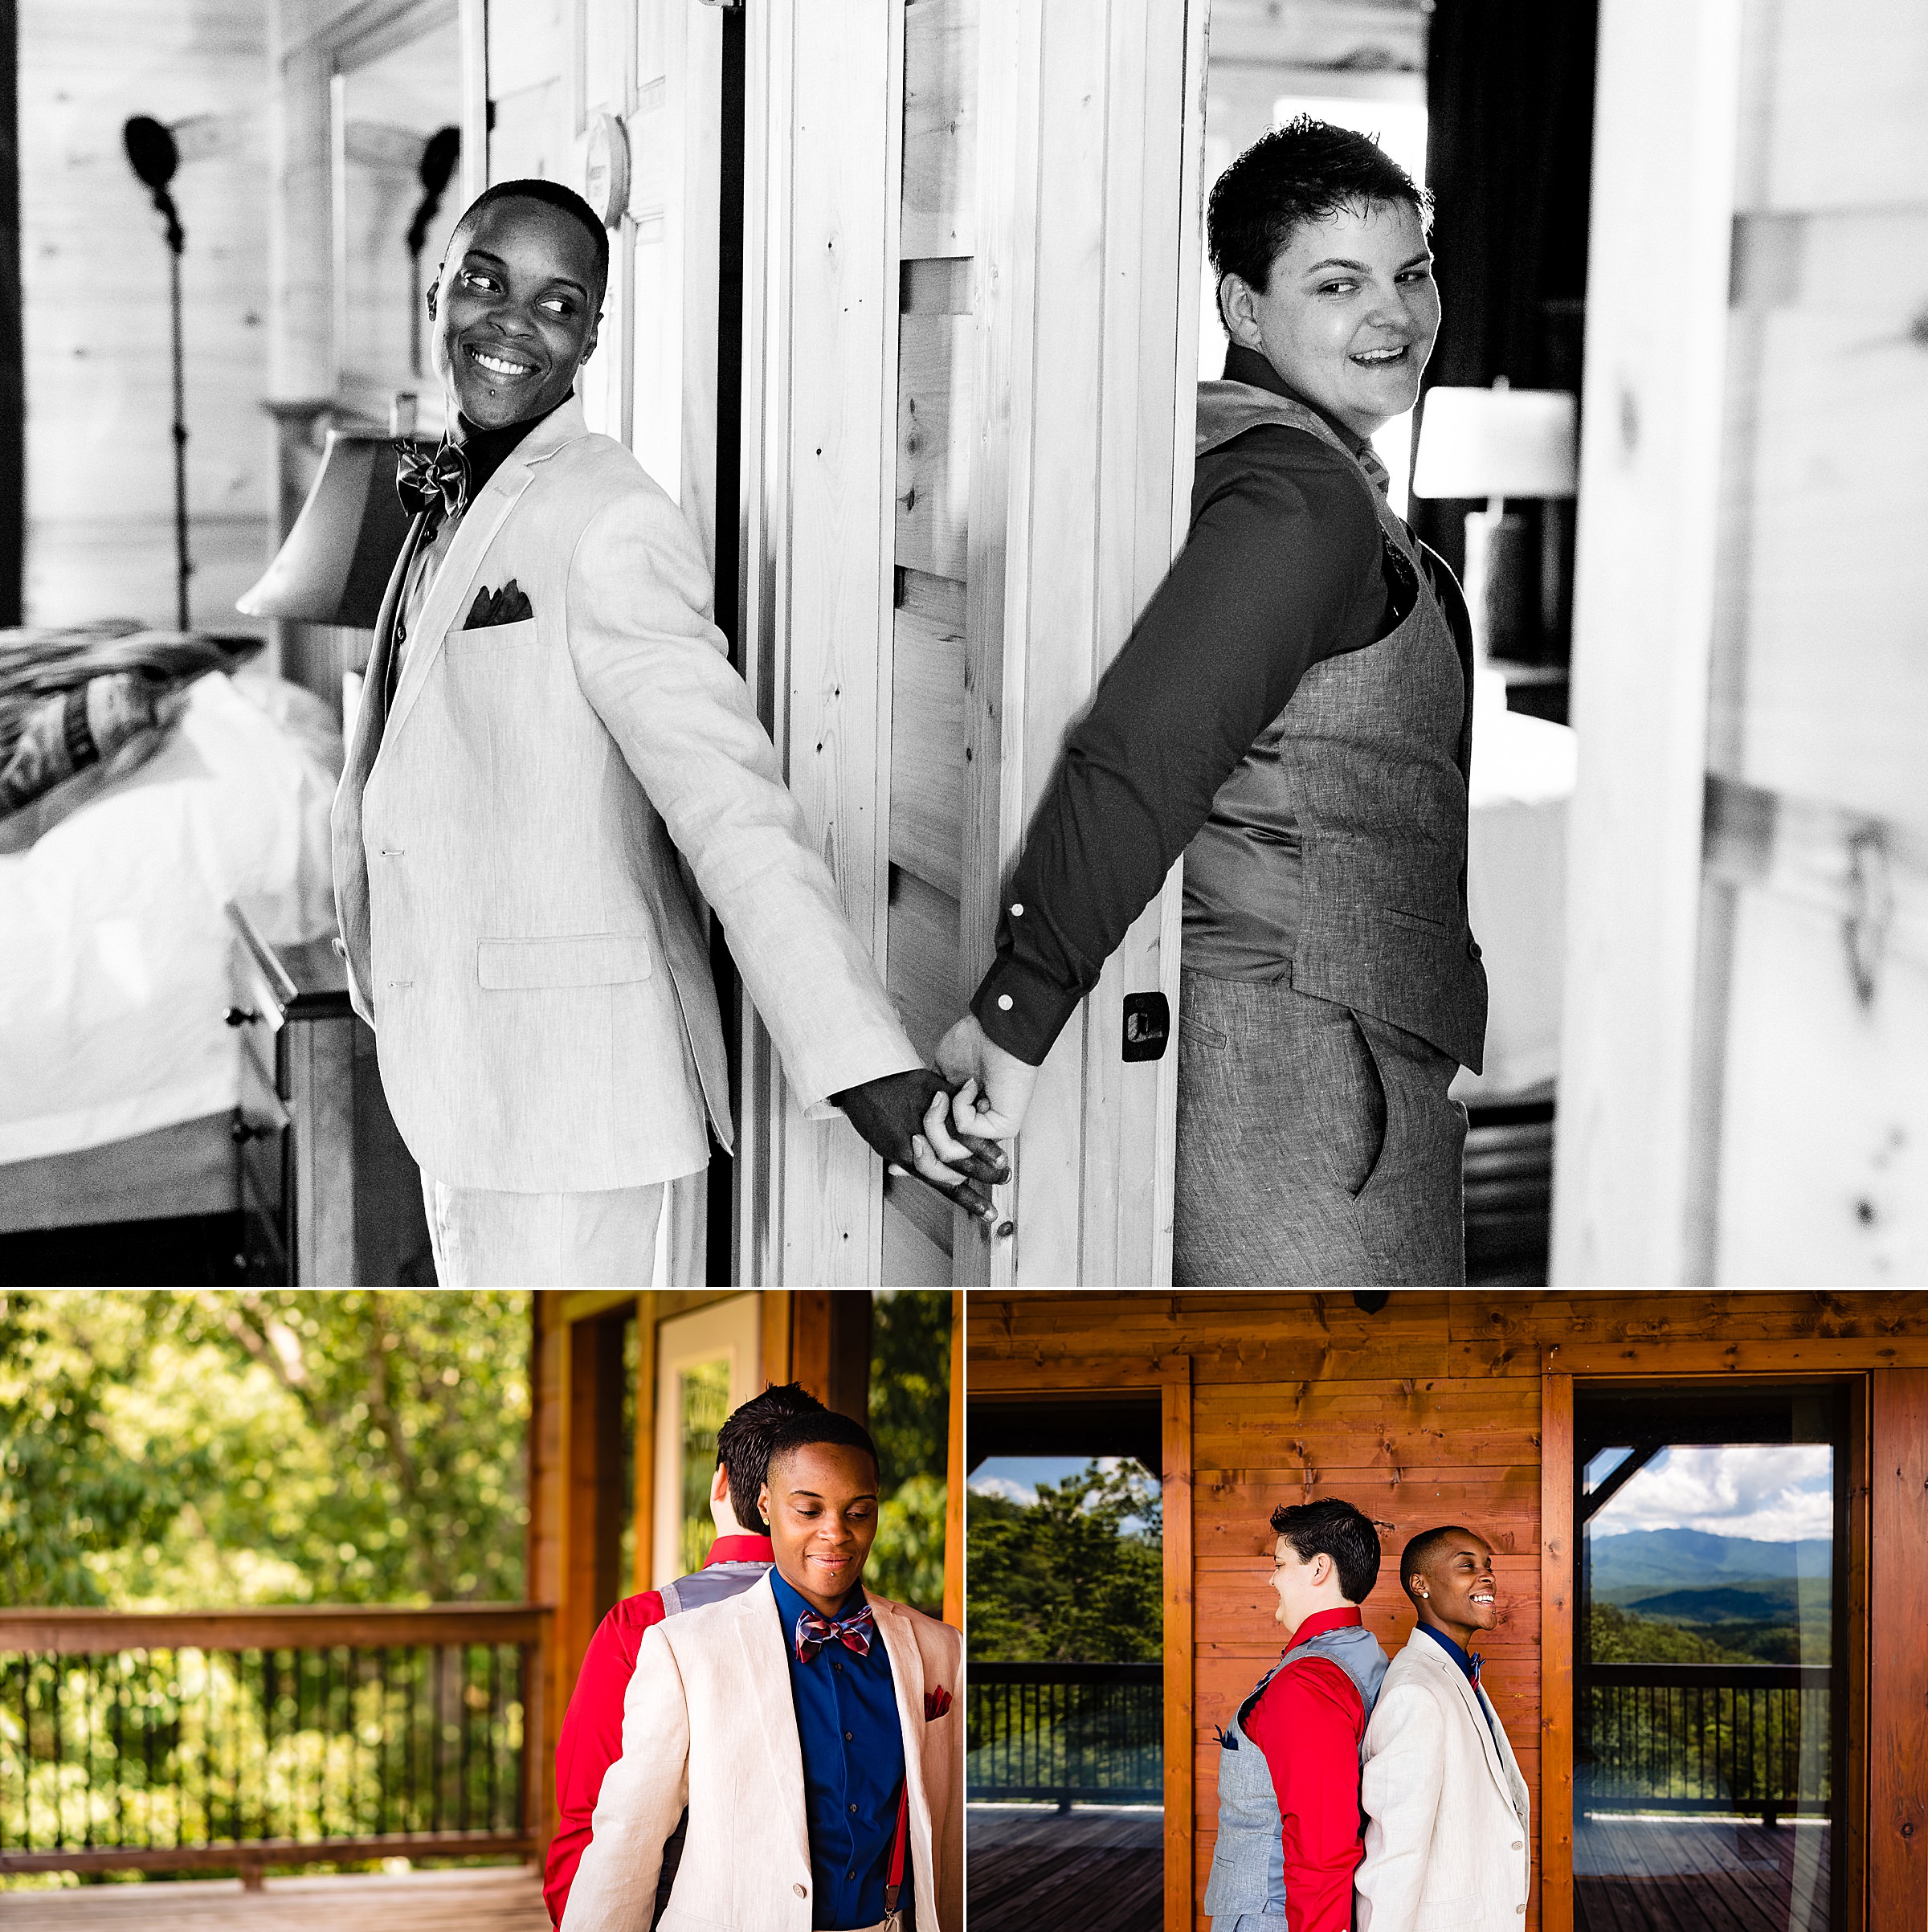 Gatlinburg Mansion, Same-sex wedding, LGBT wedding, Colorful wedding, Intimate Wedding, Gatlinburg Mansion Wedding, Mountain Wedding, North Carolina same-sex wedding photographers | kivusandcamera.com